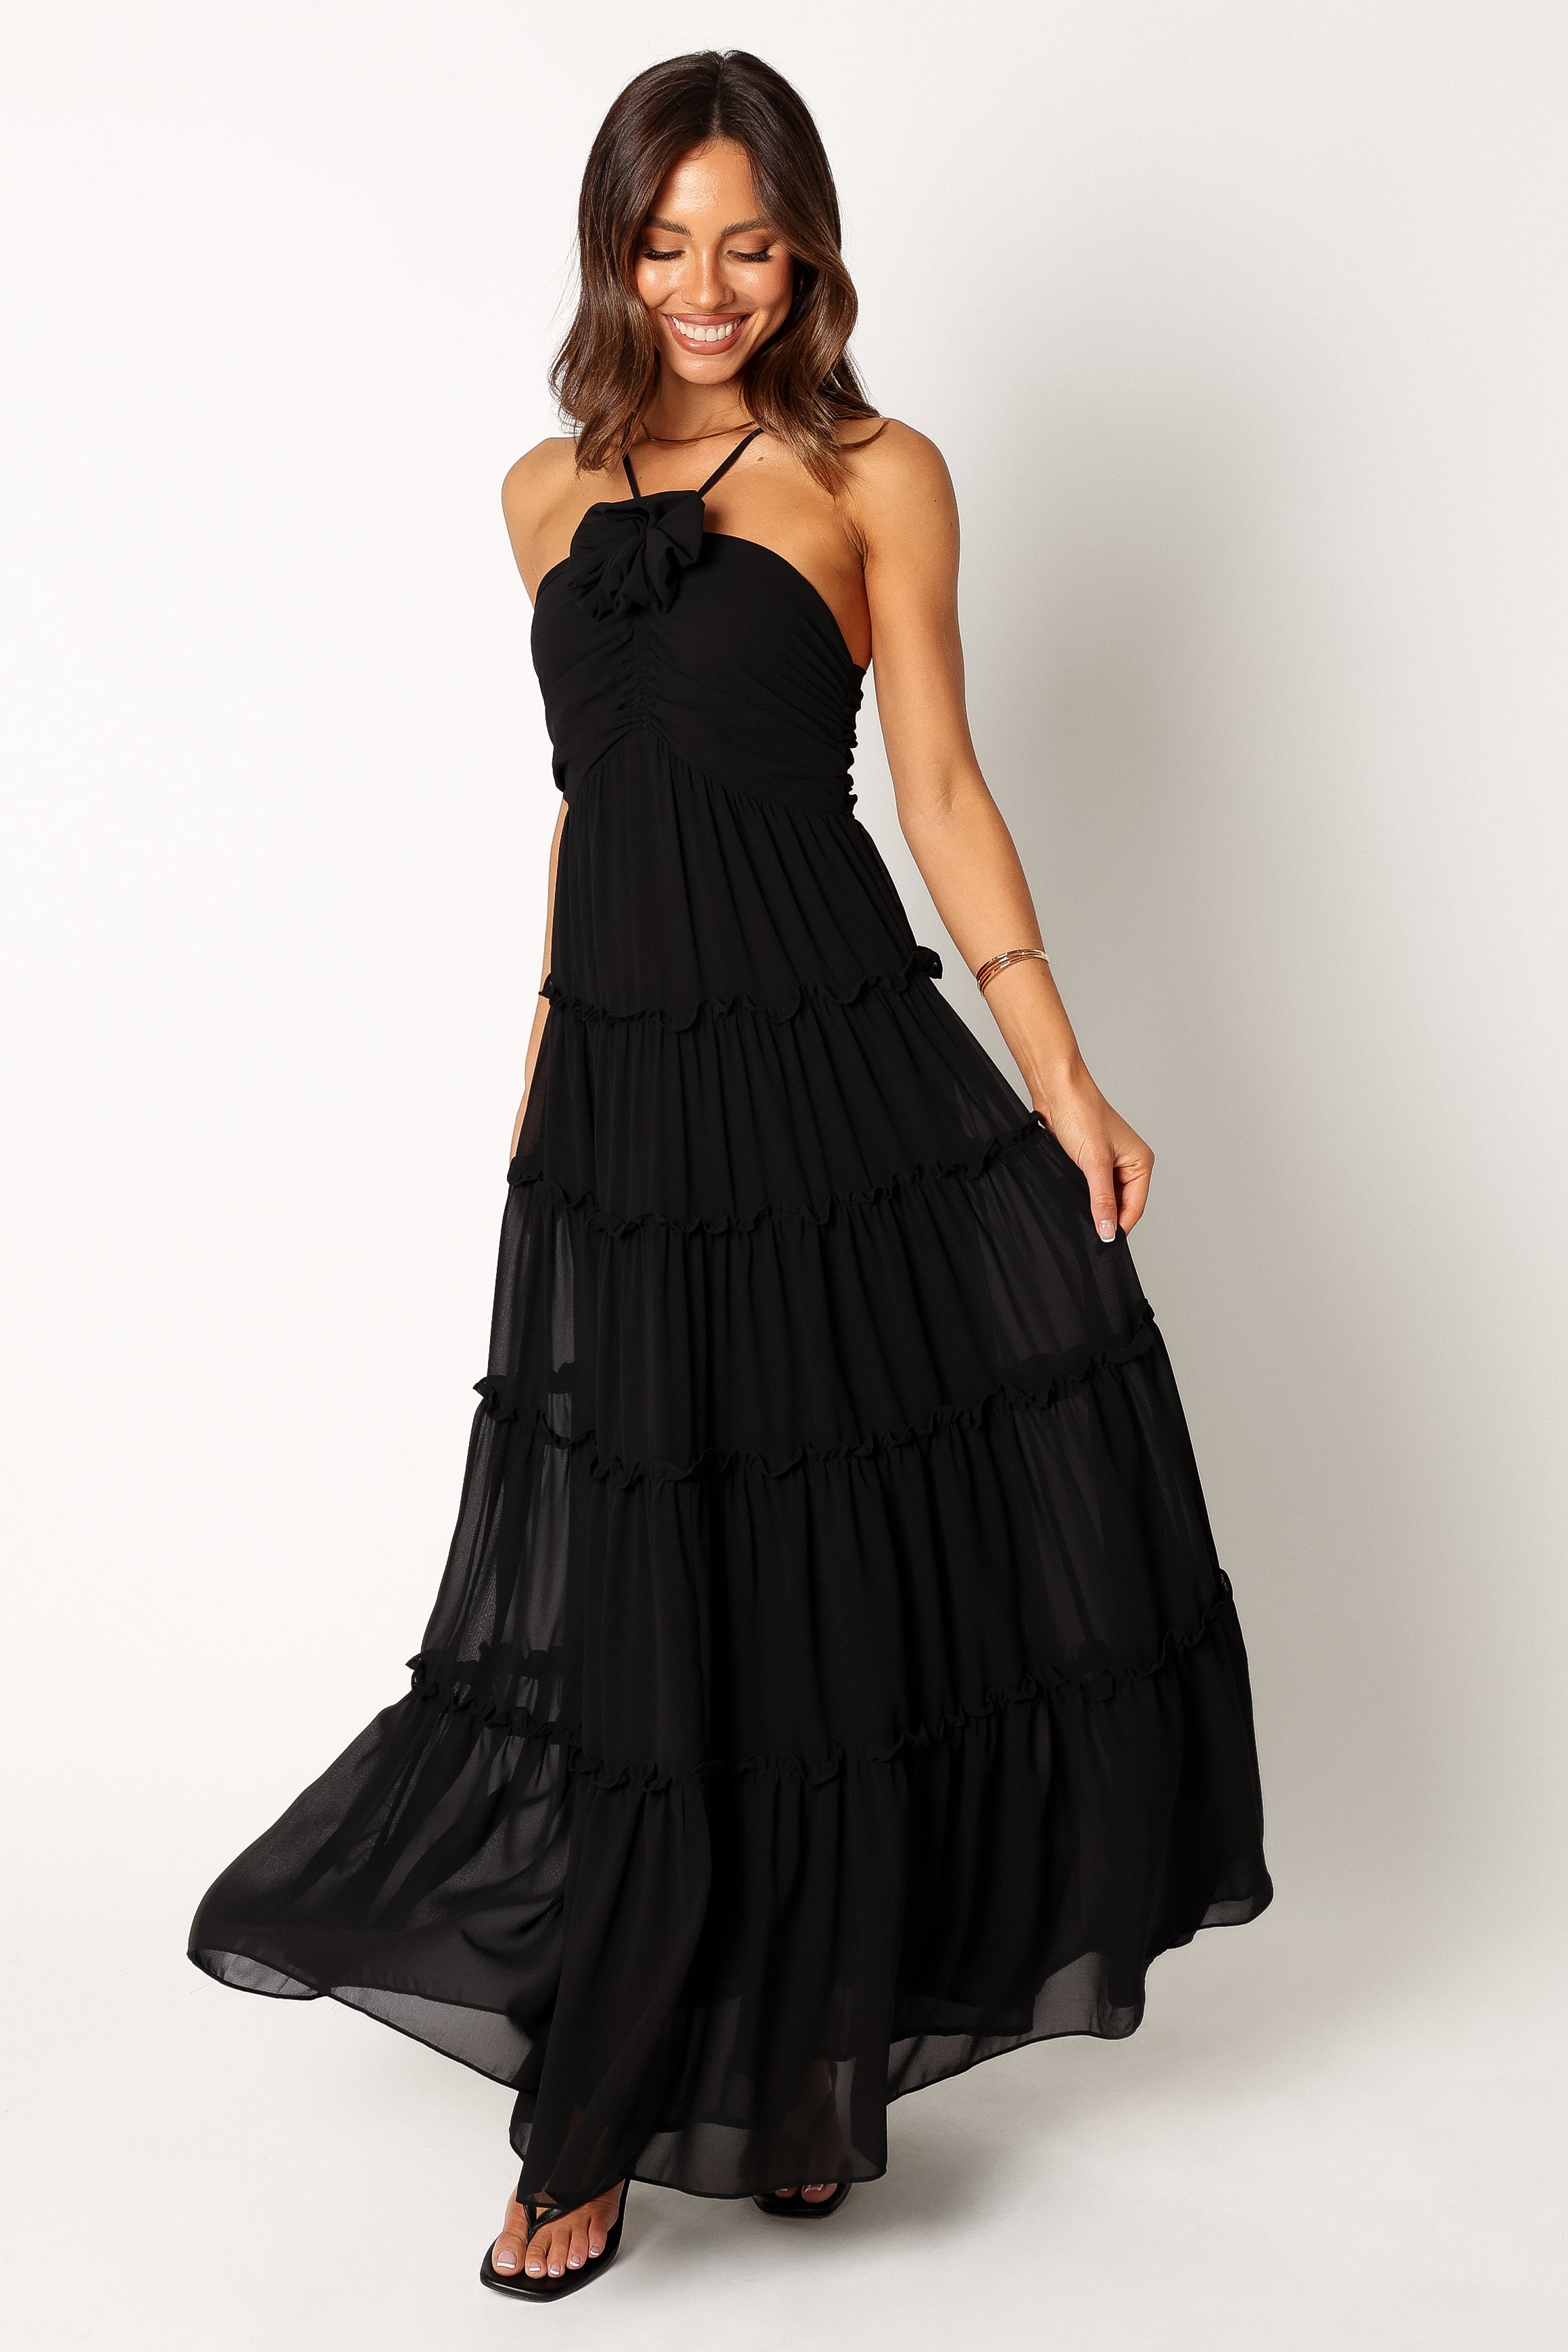 Buy Lipsy Black Applique Halter Maxi Dress from the Next UK online